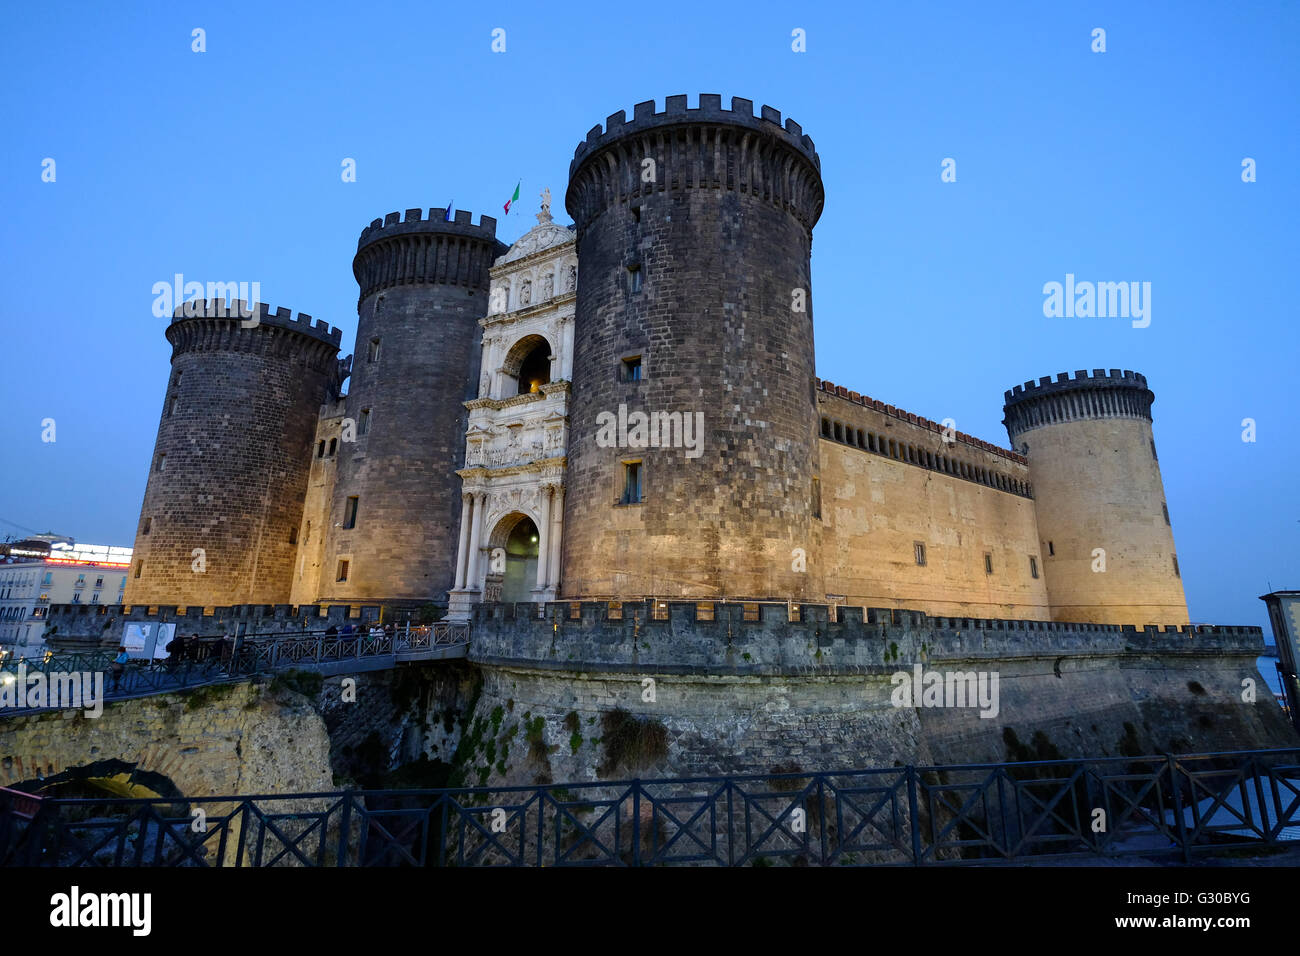 Castel Nuovo (Maschio Angioino), a medieval castle located in front of Piazza Municipio, Naples, Campania, Italy, Europe Stock Photo